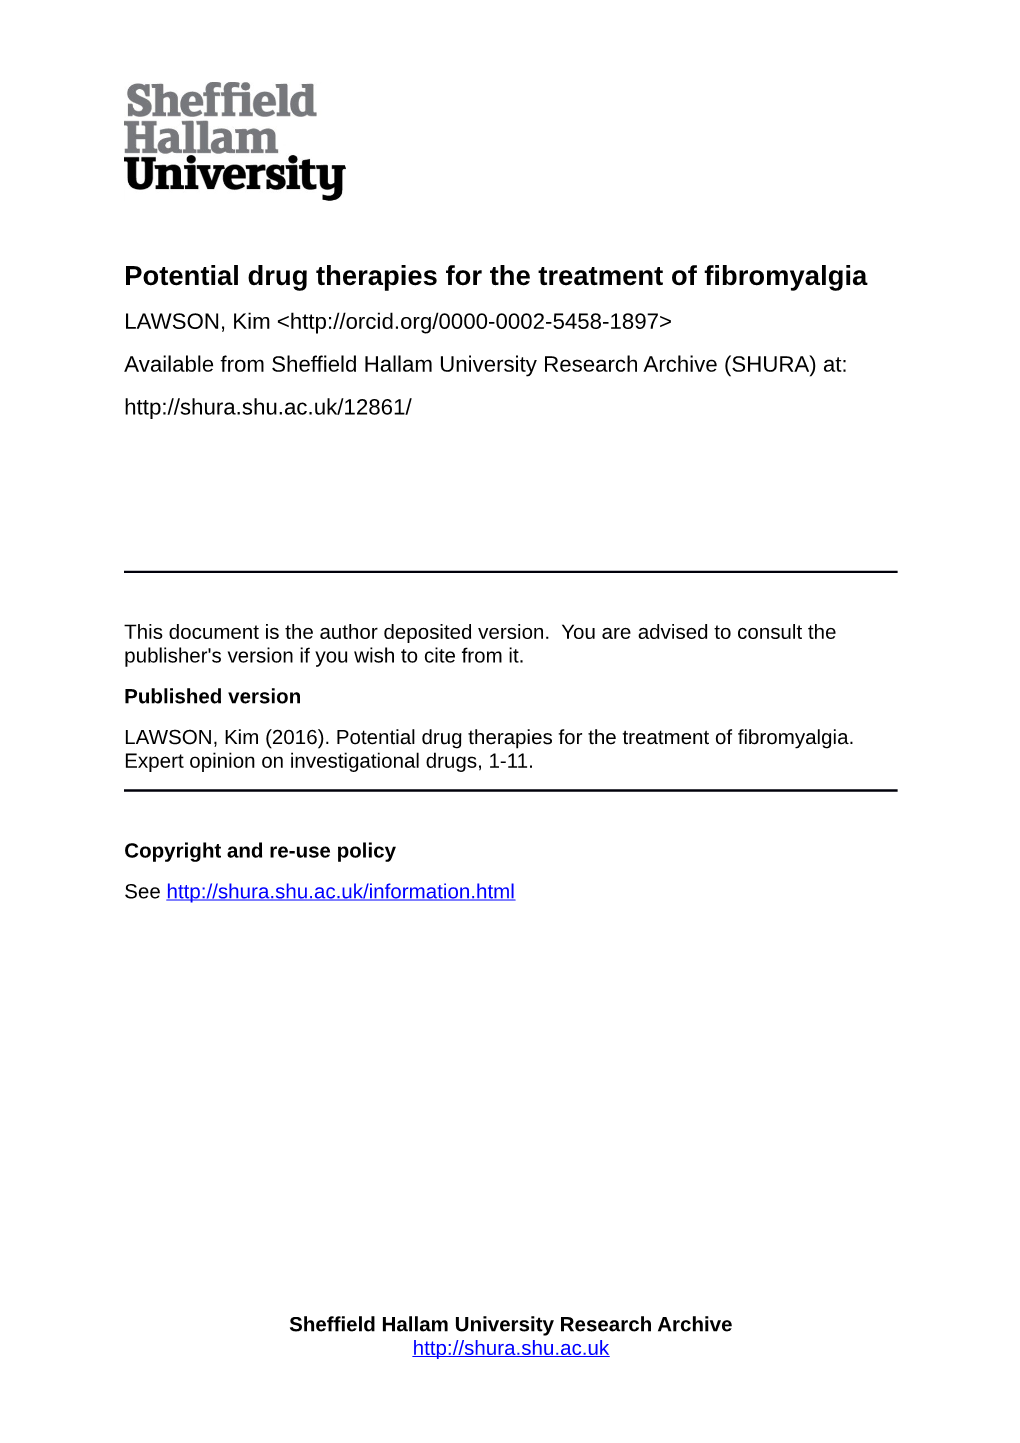 Potential Drug Therapies for the Treatment of Fibromyalgia